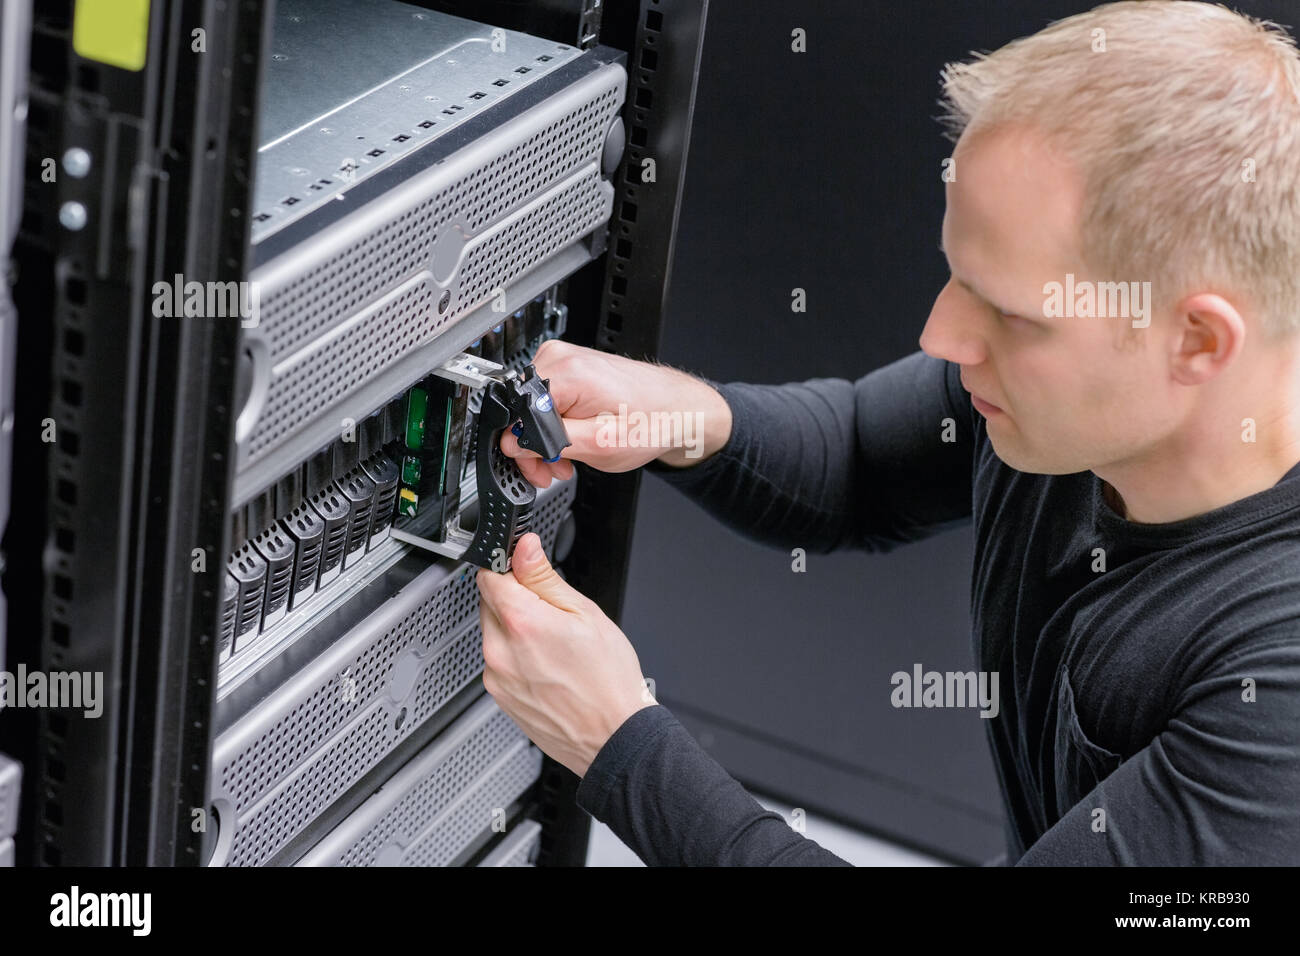 IT Consultant insert SAN hard drive Stock Photo